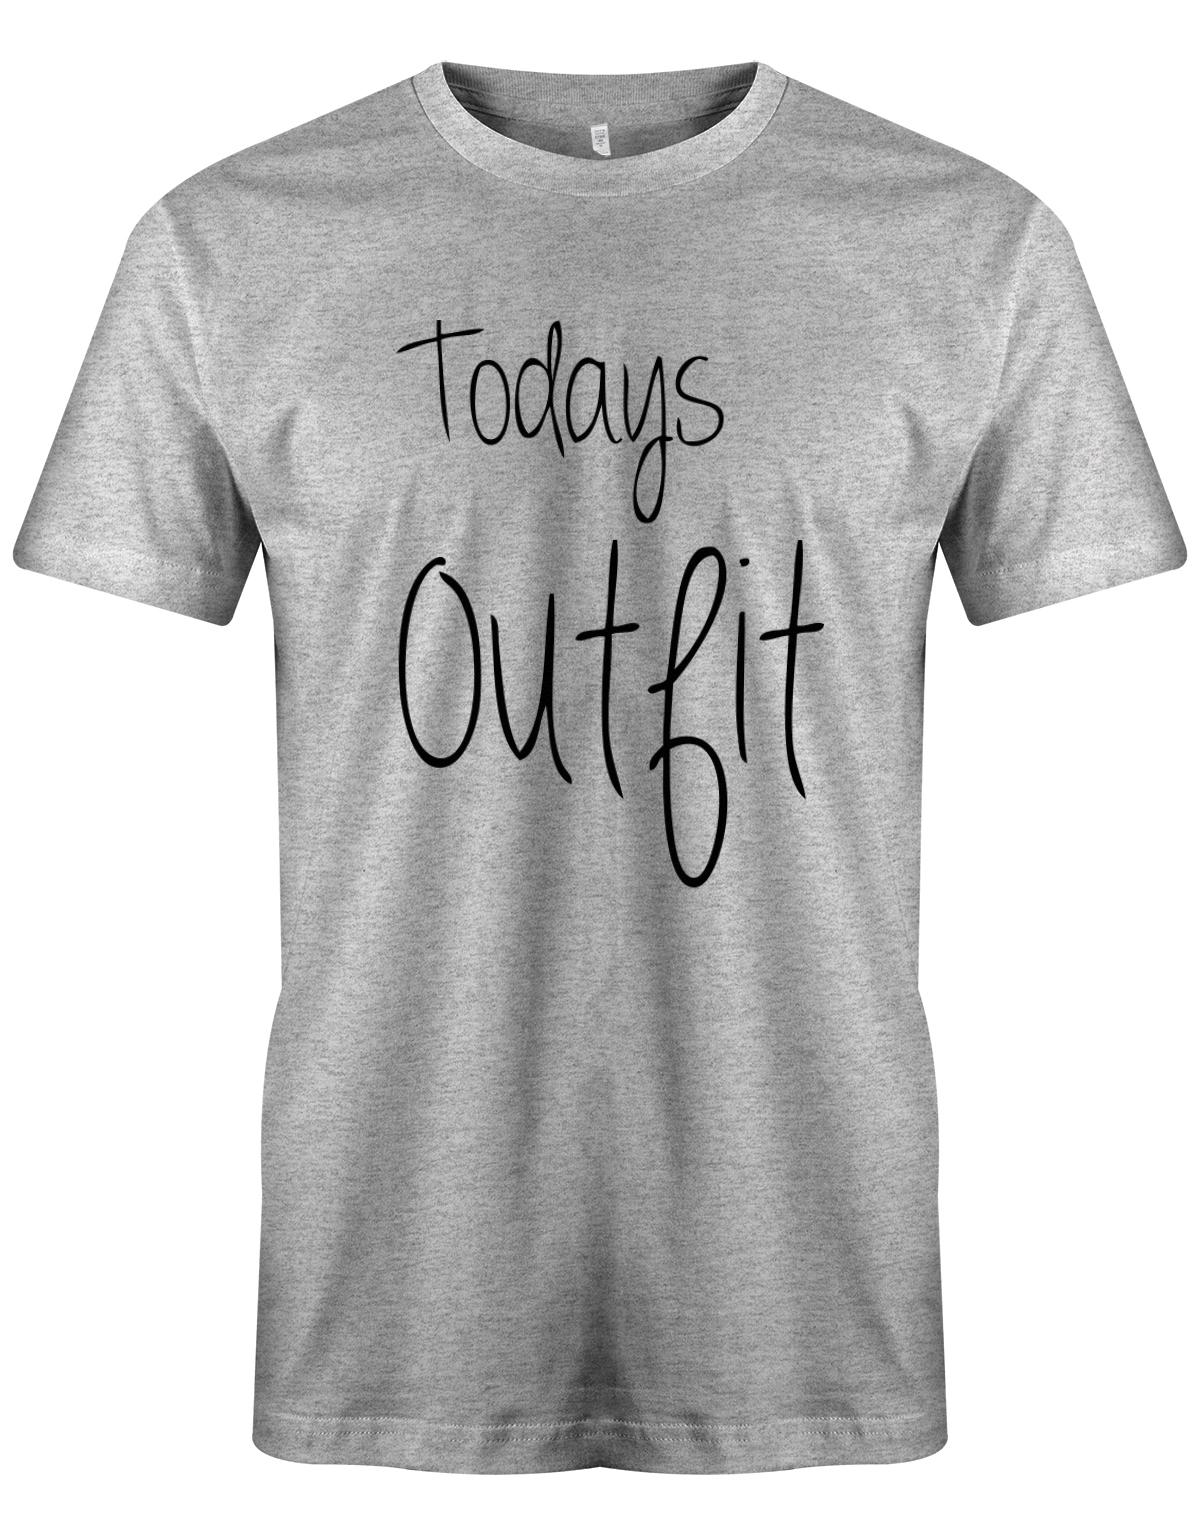 todays-outfit-Herren-Shirt-Grau